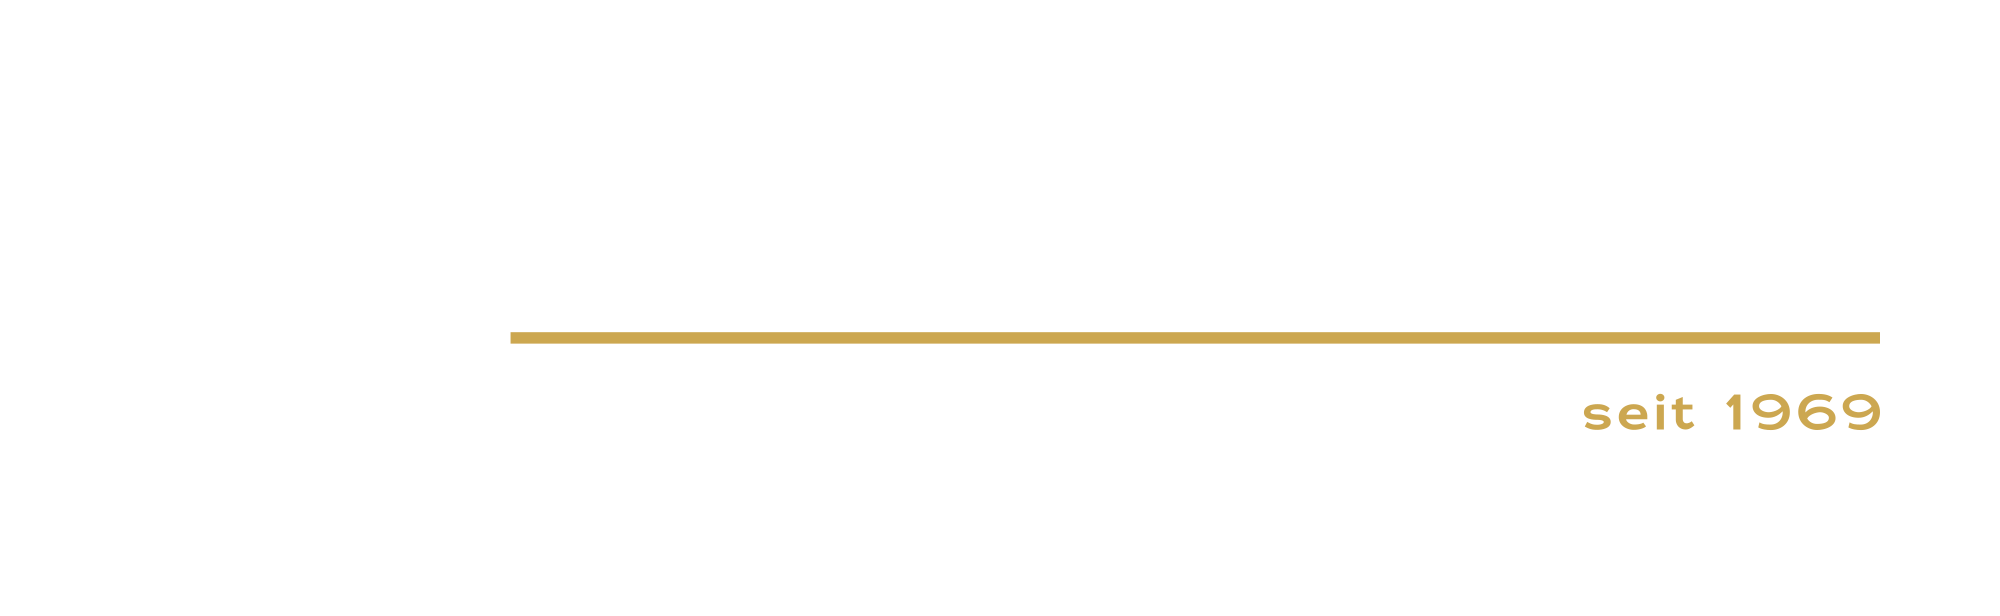 Paul Rybarsch Hörakustik Logo